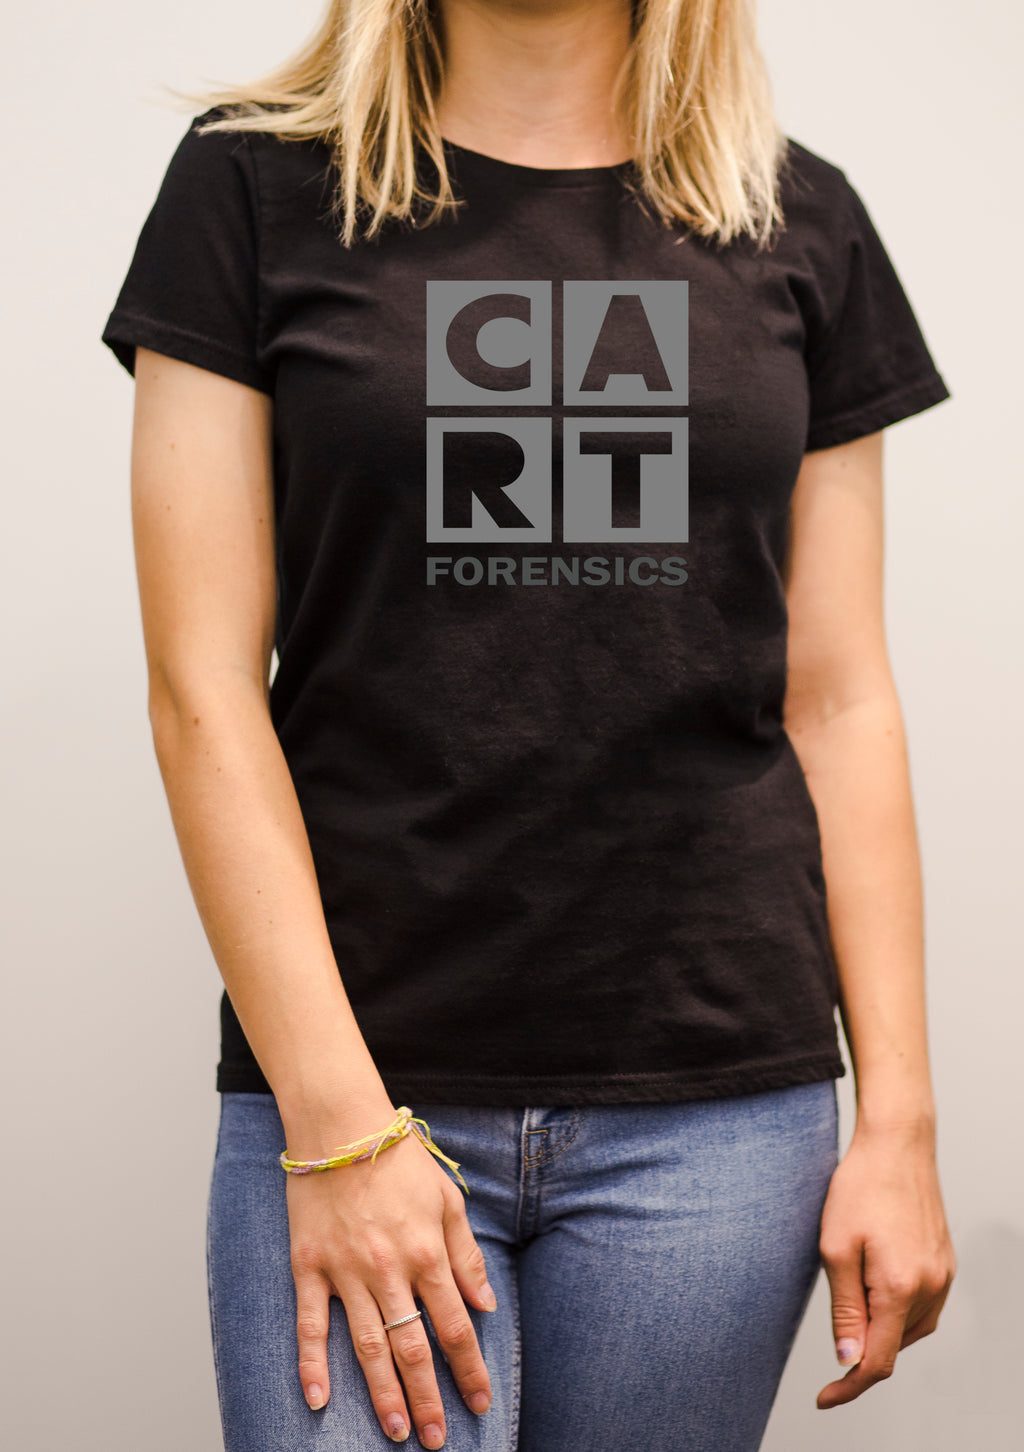 Women's short sleeve t-shirt - Forensics black/grey logo